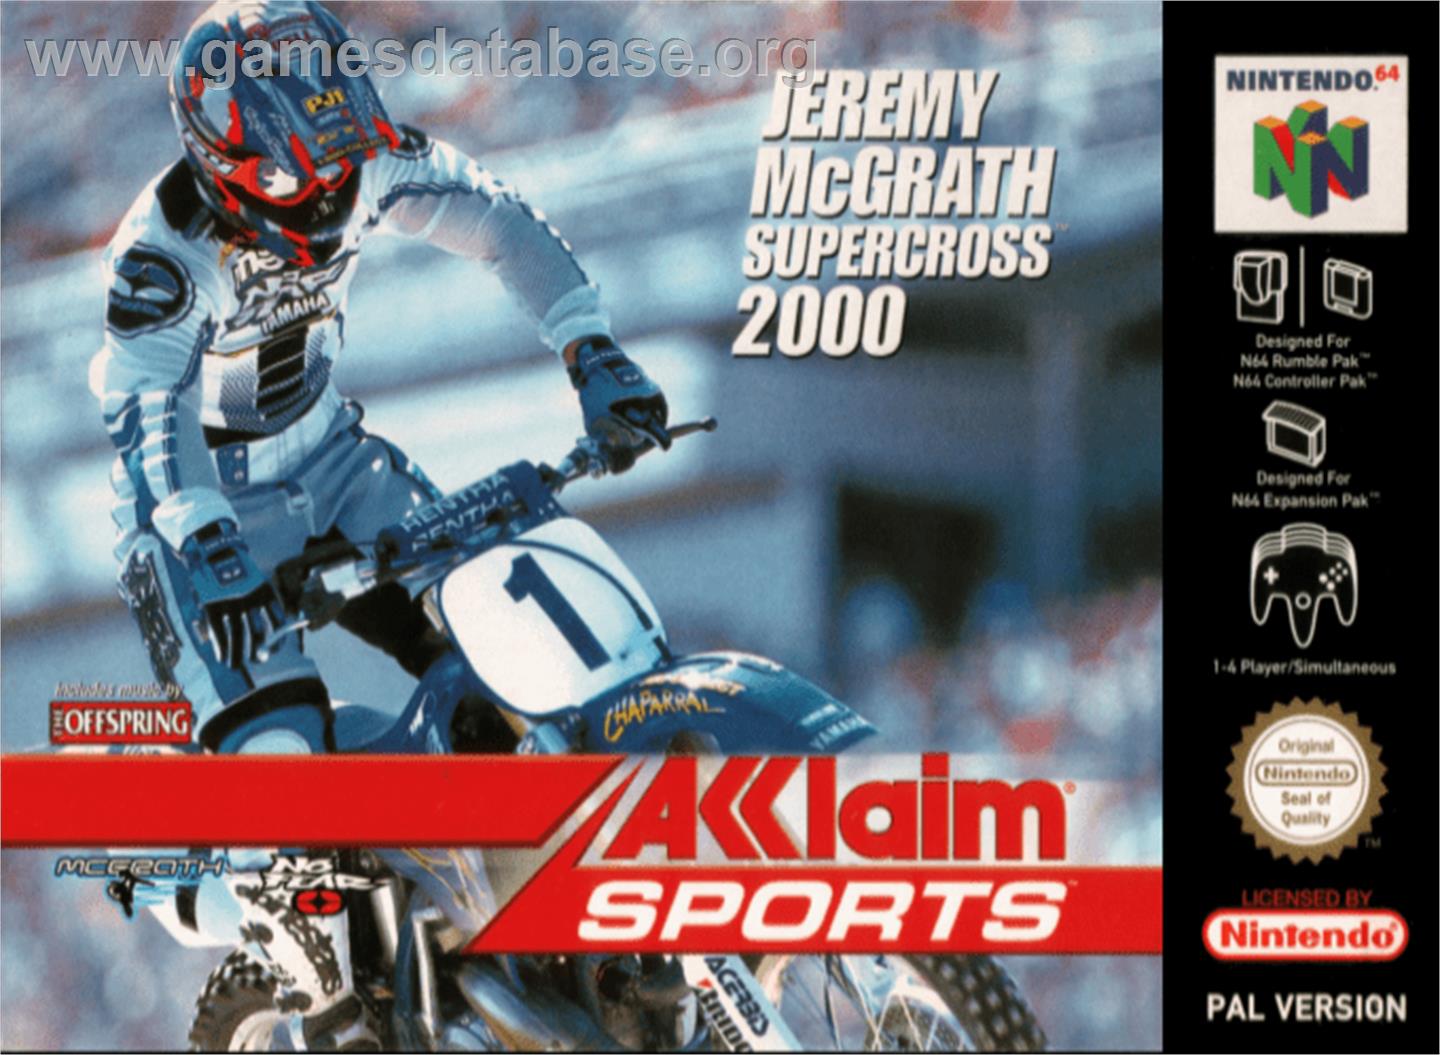 Jeremy McGrath Supercross 2000 - Nintendo N64 - Artwork - Box